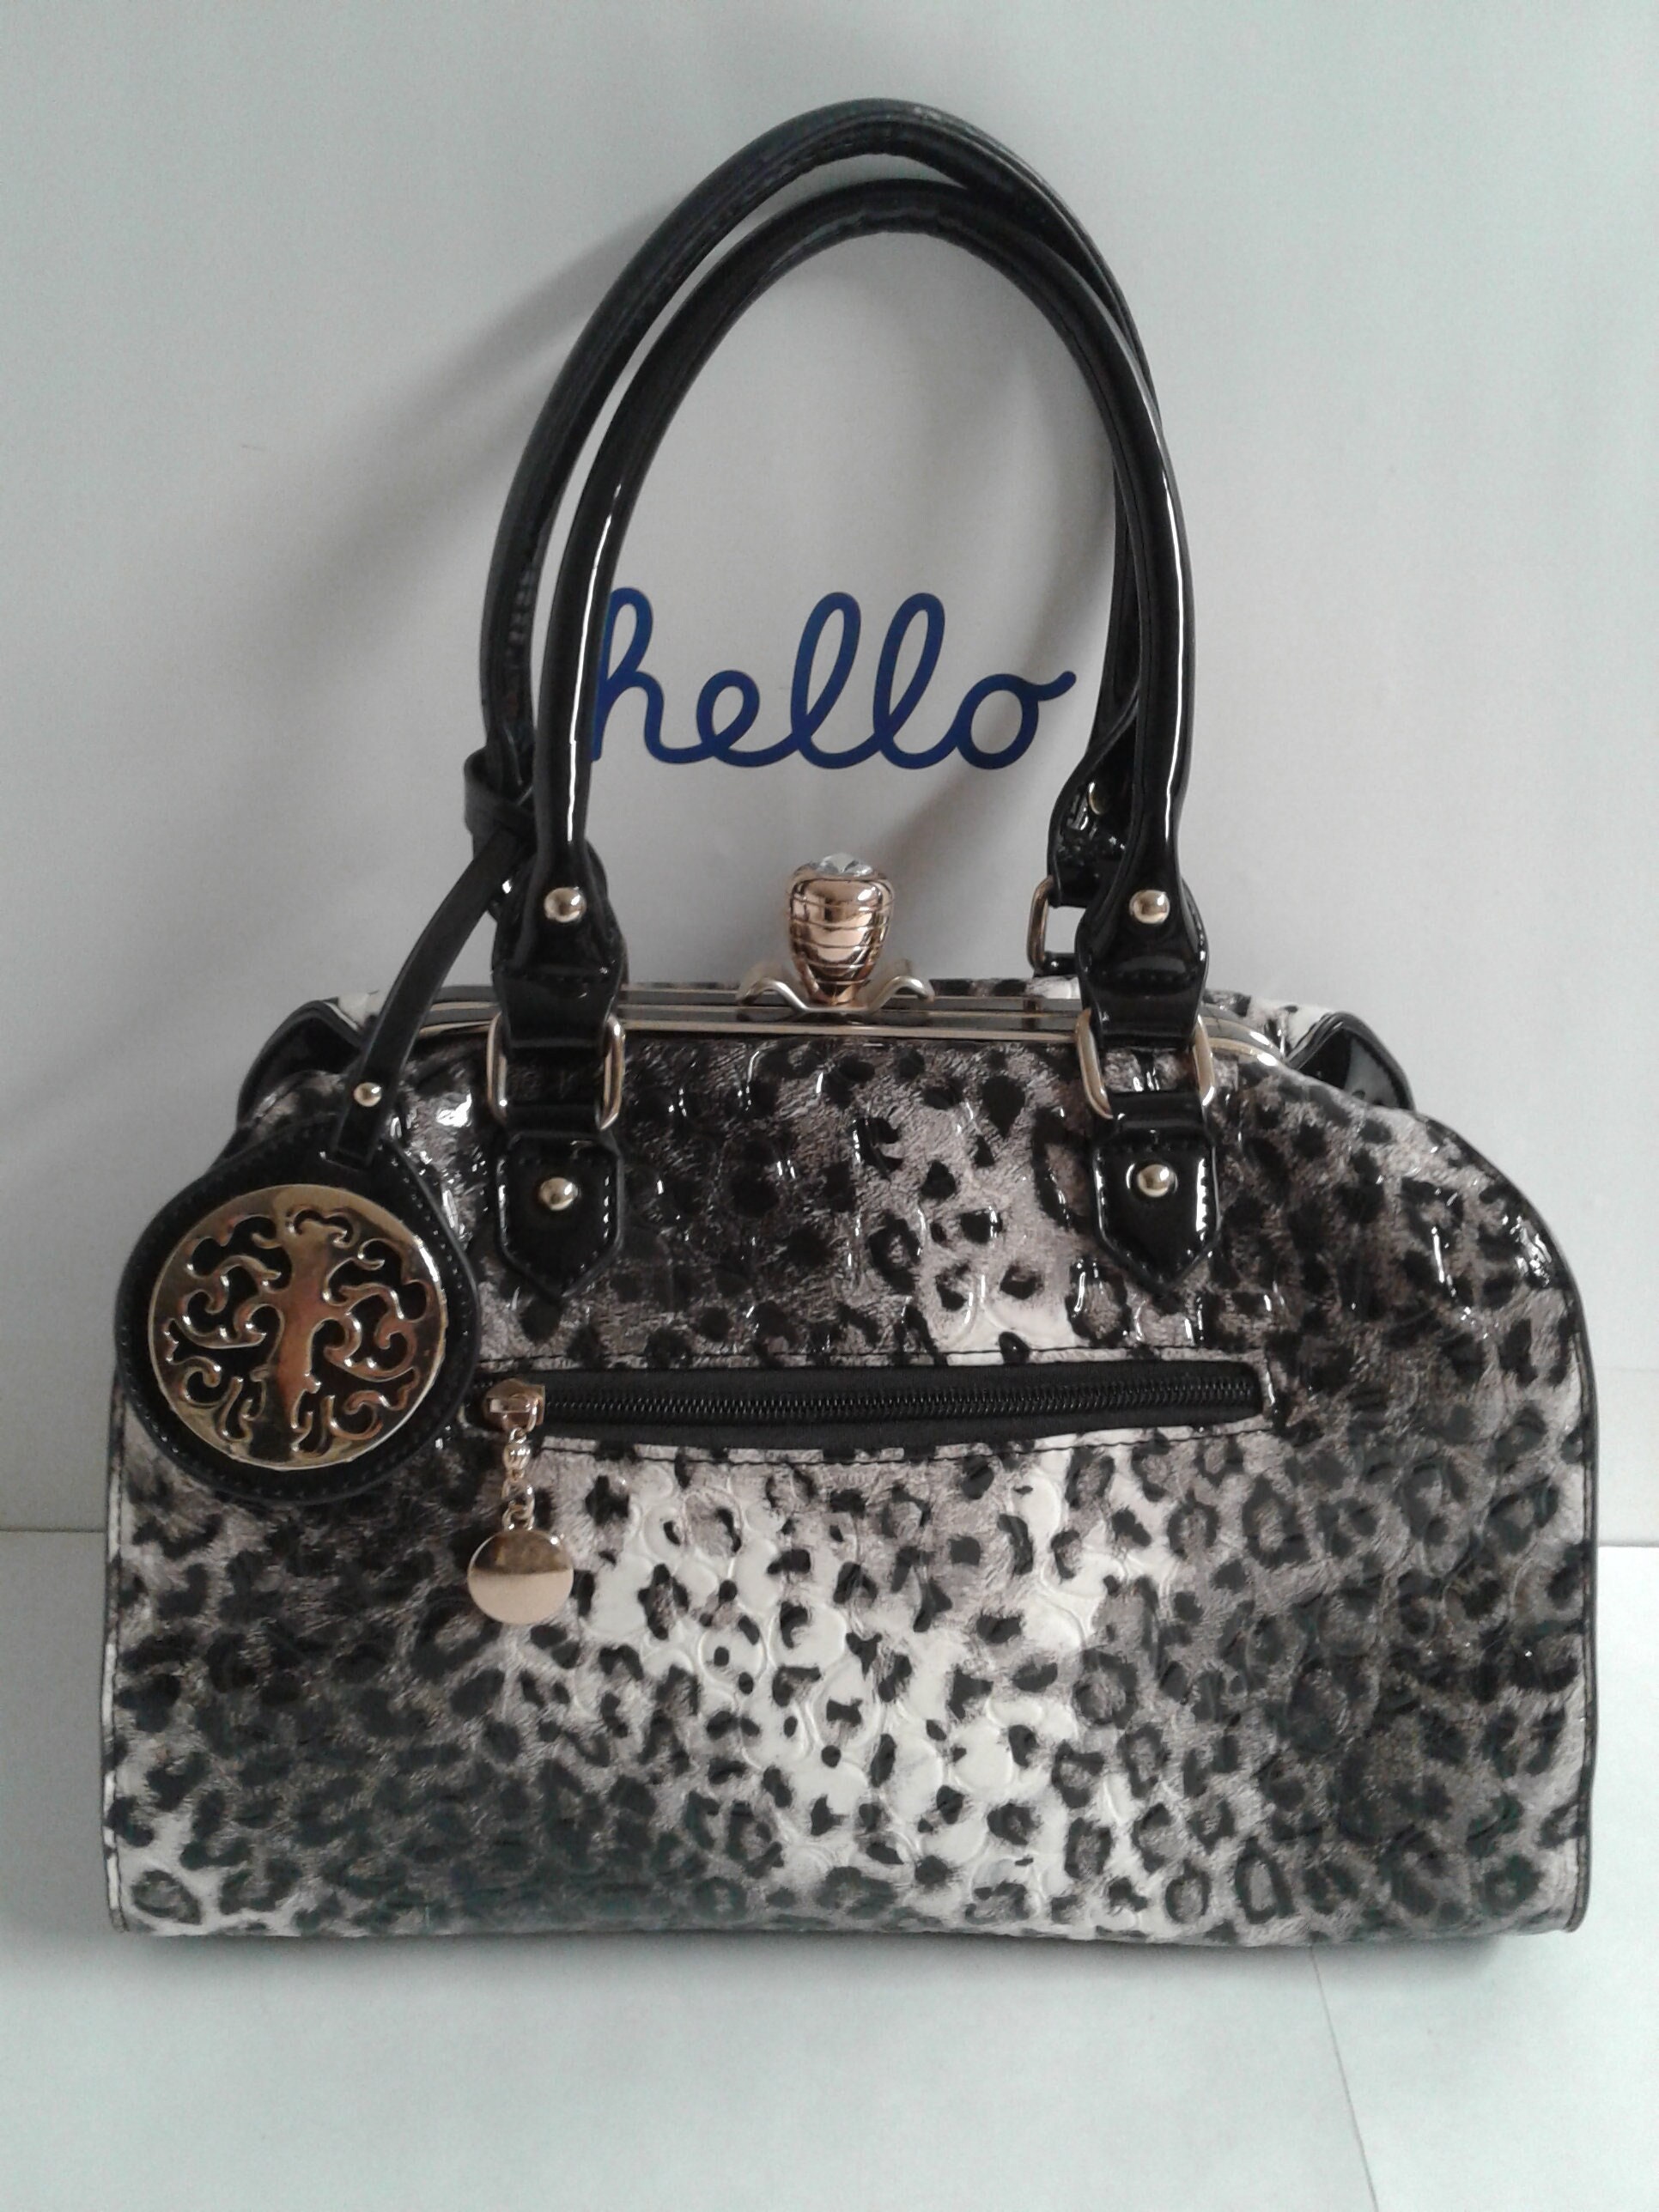 SANRIO HELLO KITTY Embossed Handbag Black Or Gray by Loungefly/Sanrio  £68.40 - PicClick UK